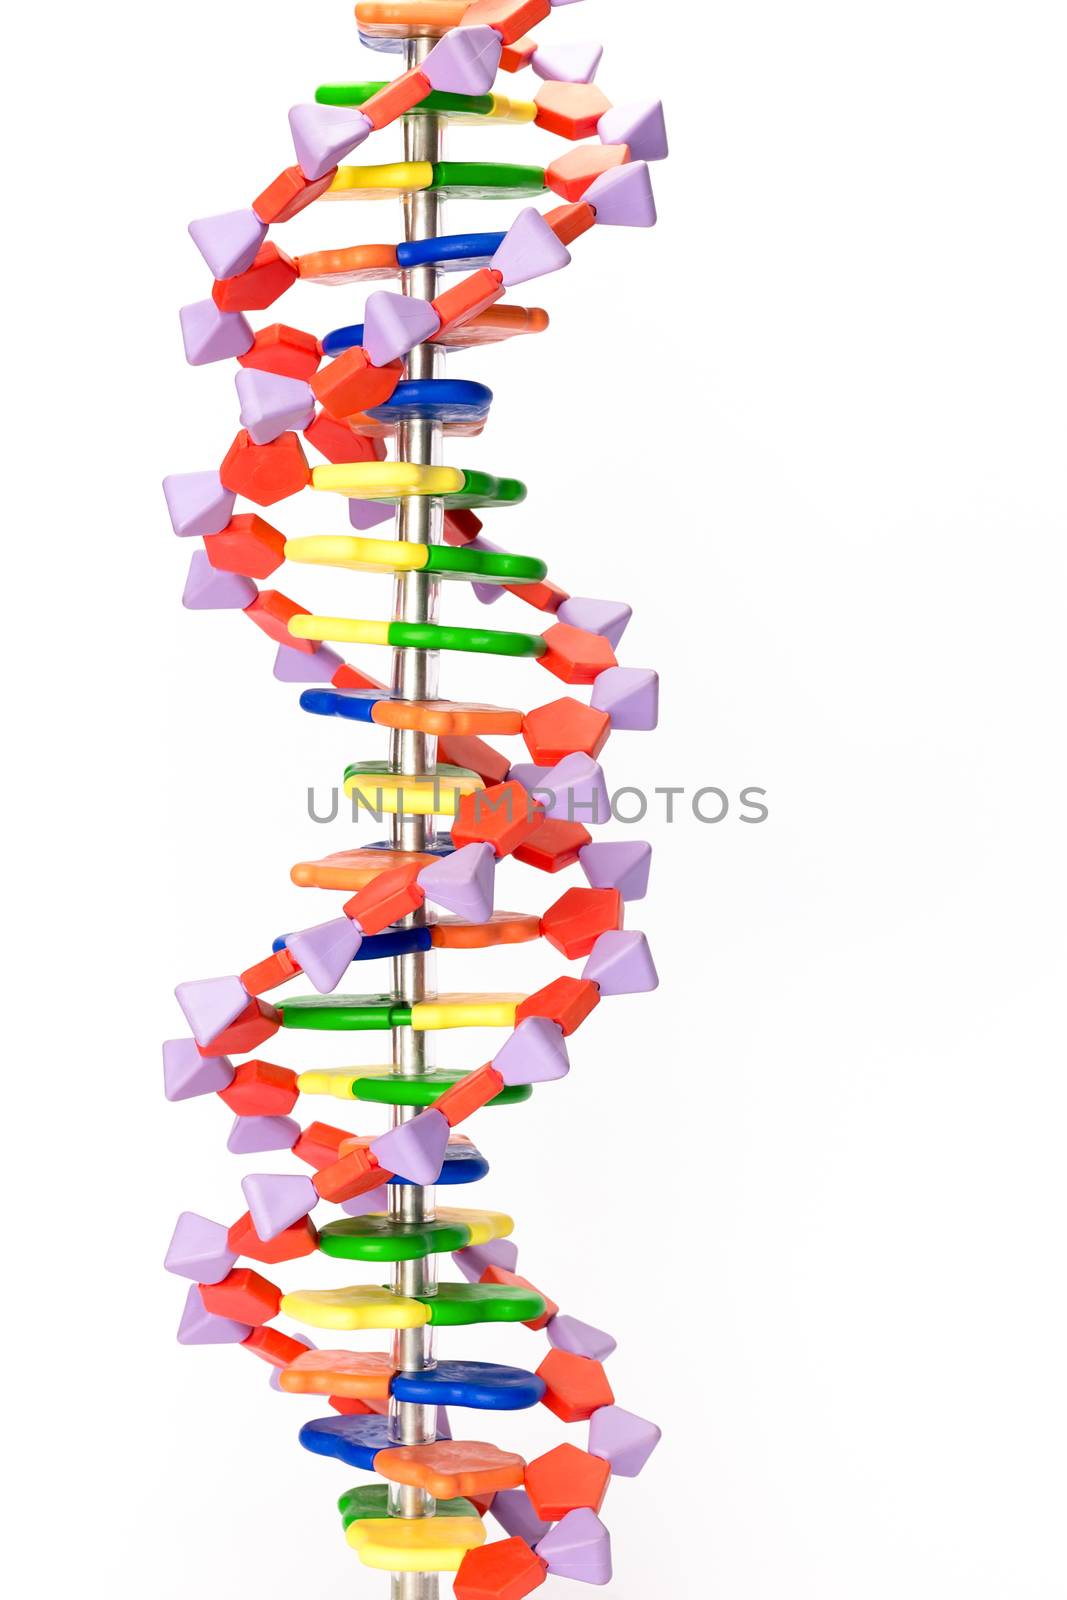 Artificial human DNA model by BenSchonewille